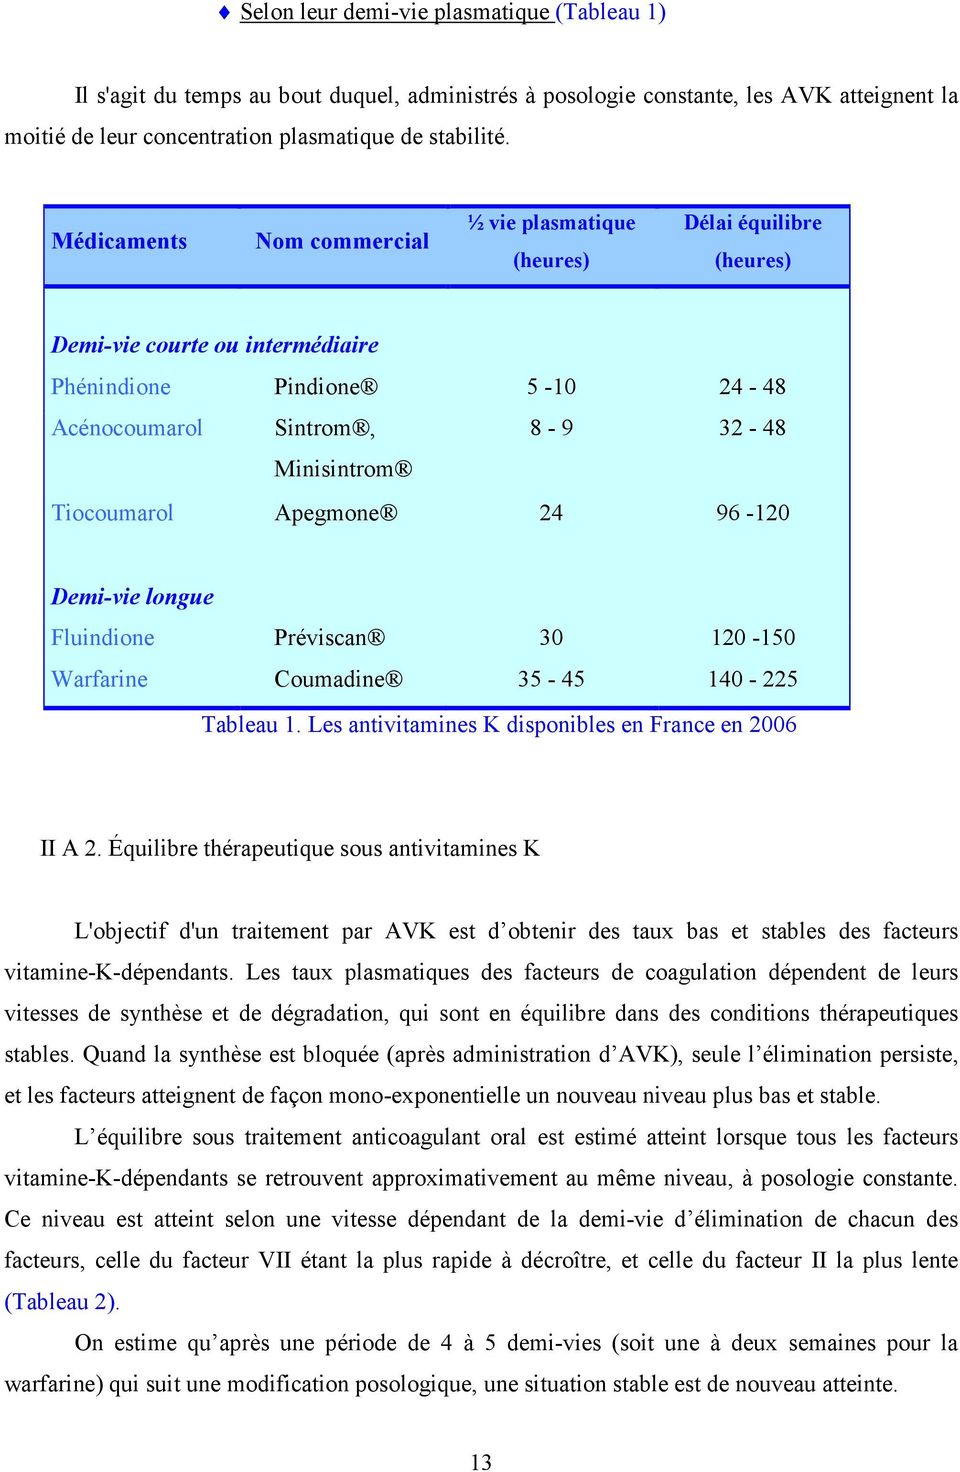 Tiocoumarol Apegmone 24 96-120 Demi-vie longue Fluindione Préviscan 30 120-150 Warfarine Coumadine 35-45 140-225 Tableau 1. Les antivitamines K disponibles en France en 2006 II A 2.